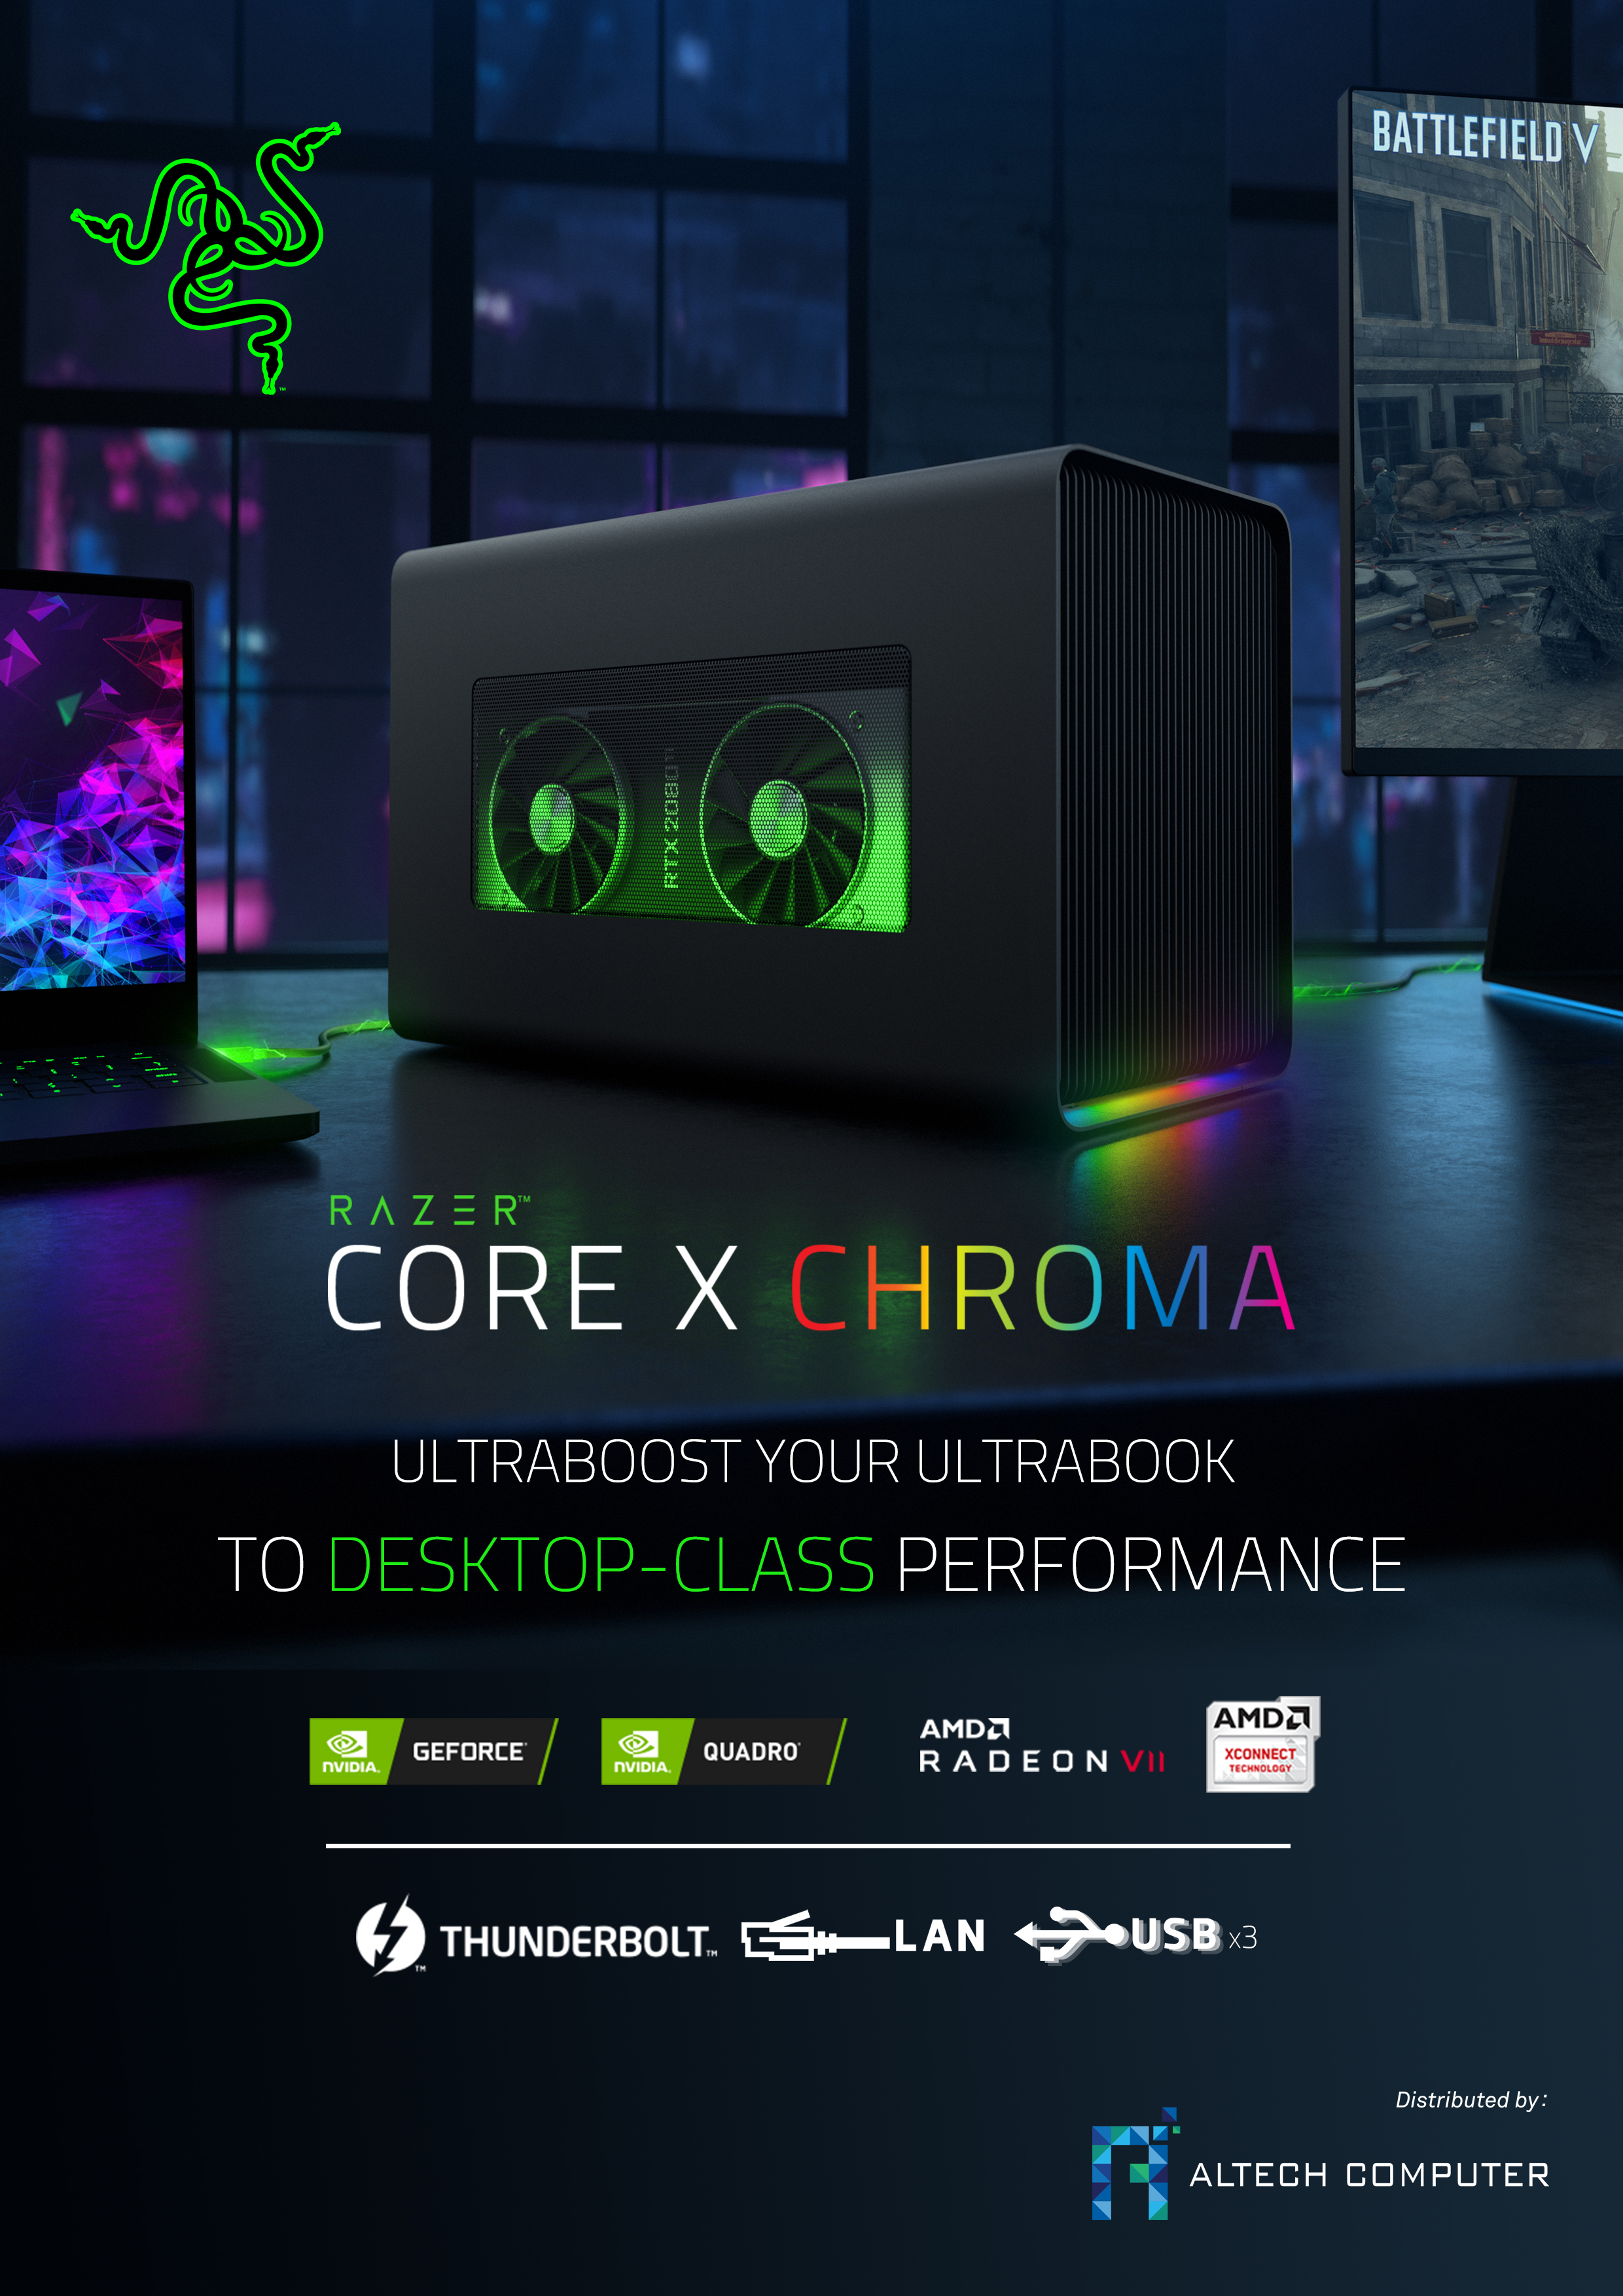 RAZER 全新 CORE X CHROMA 強力支援 WINDOWS 和 MAC 筆電 - XFastest Hong Kong